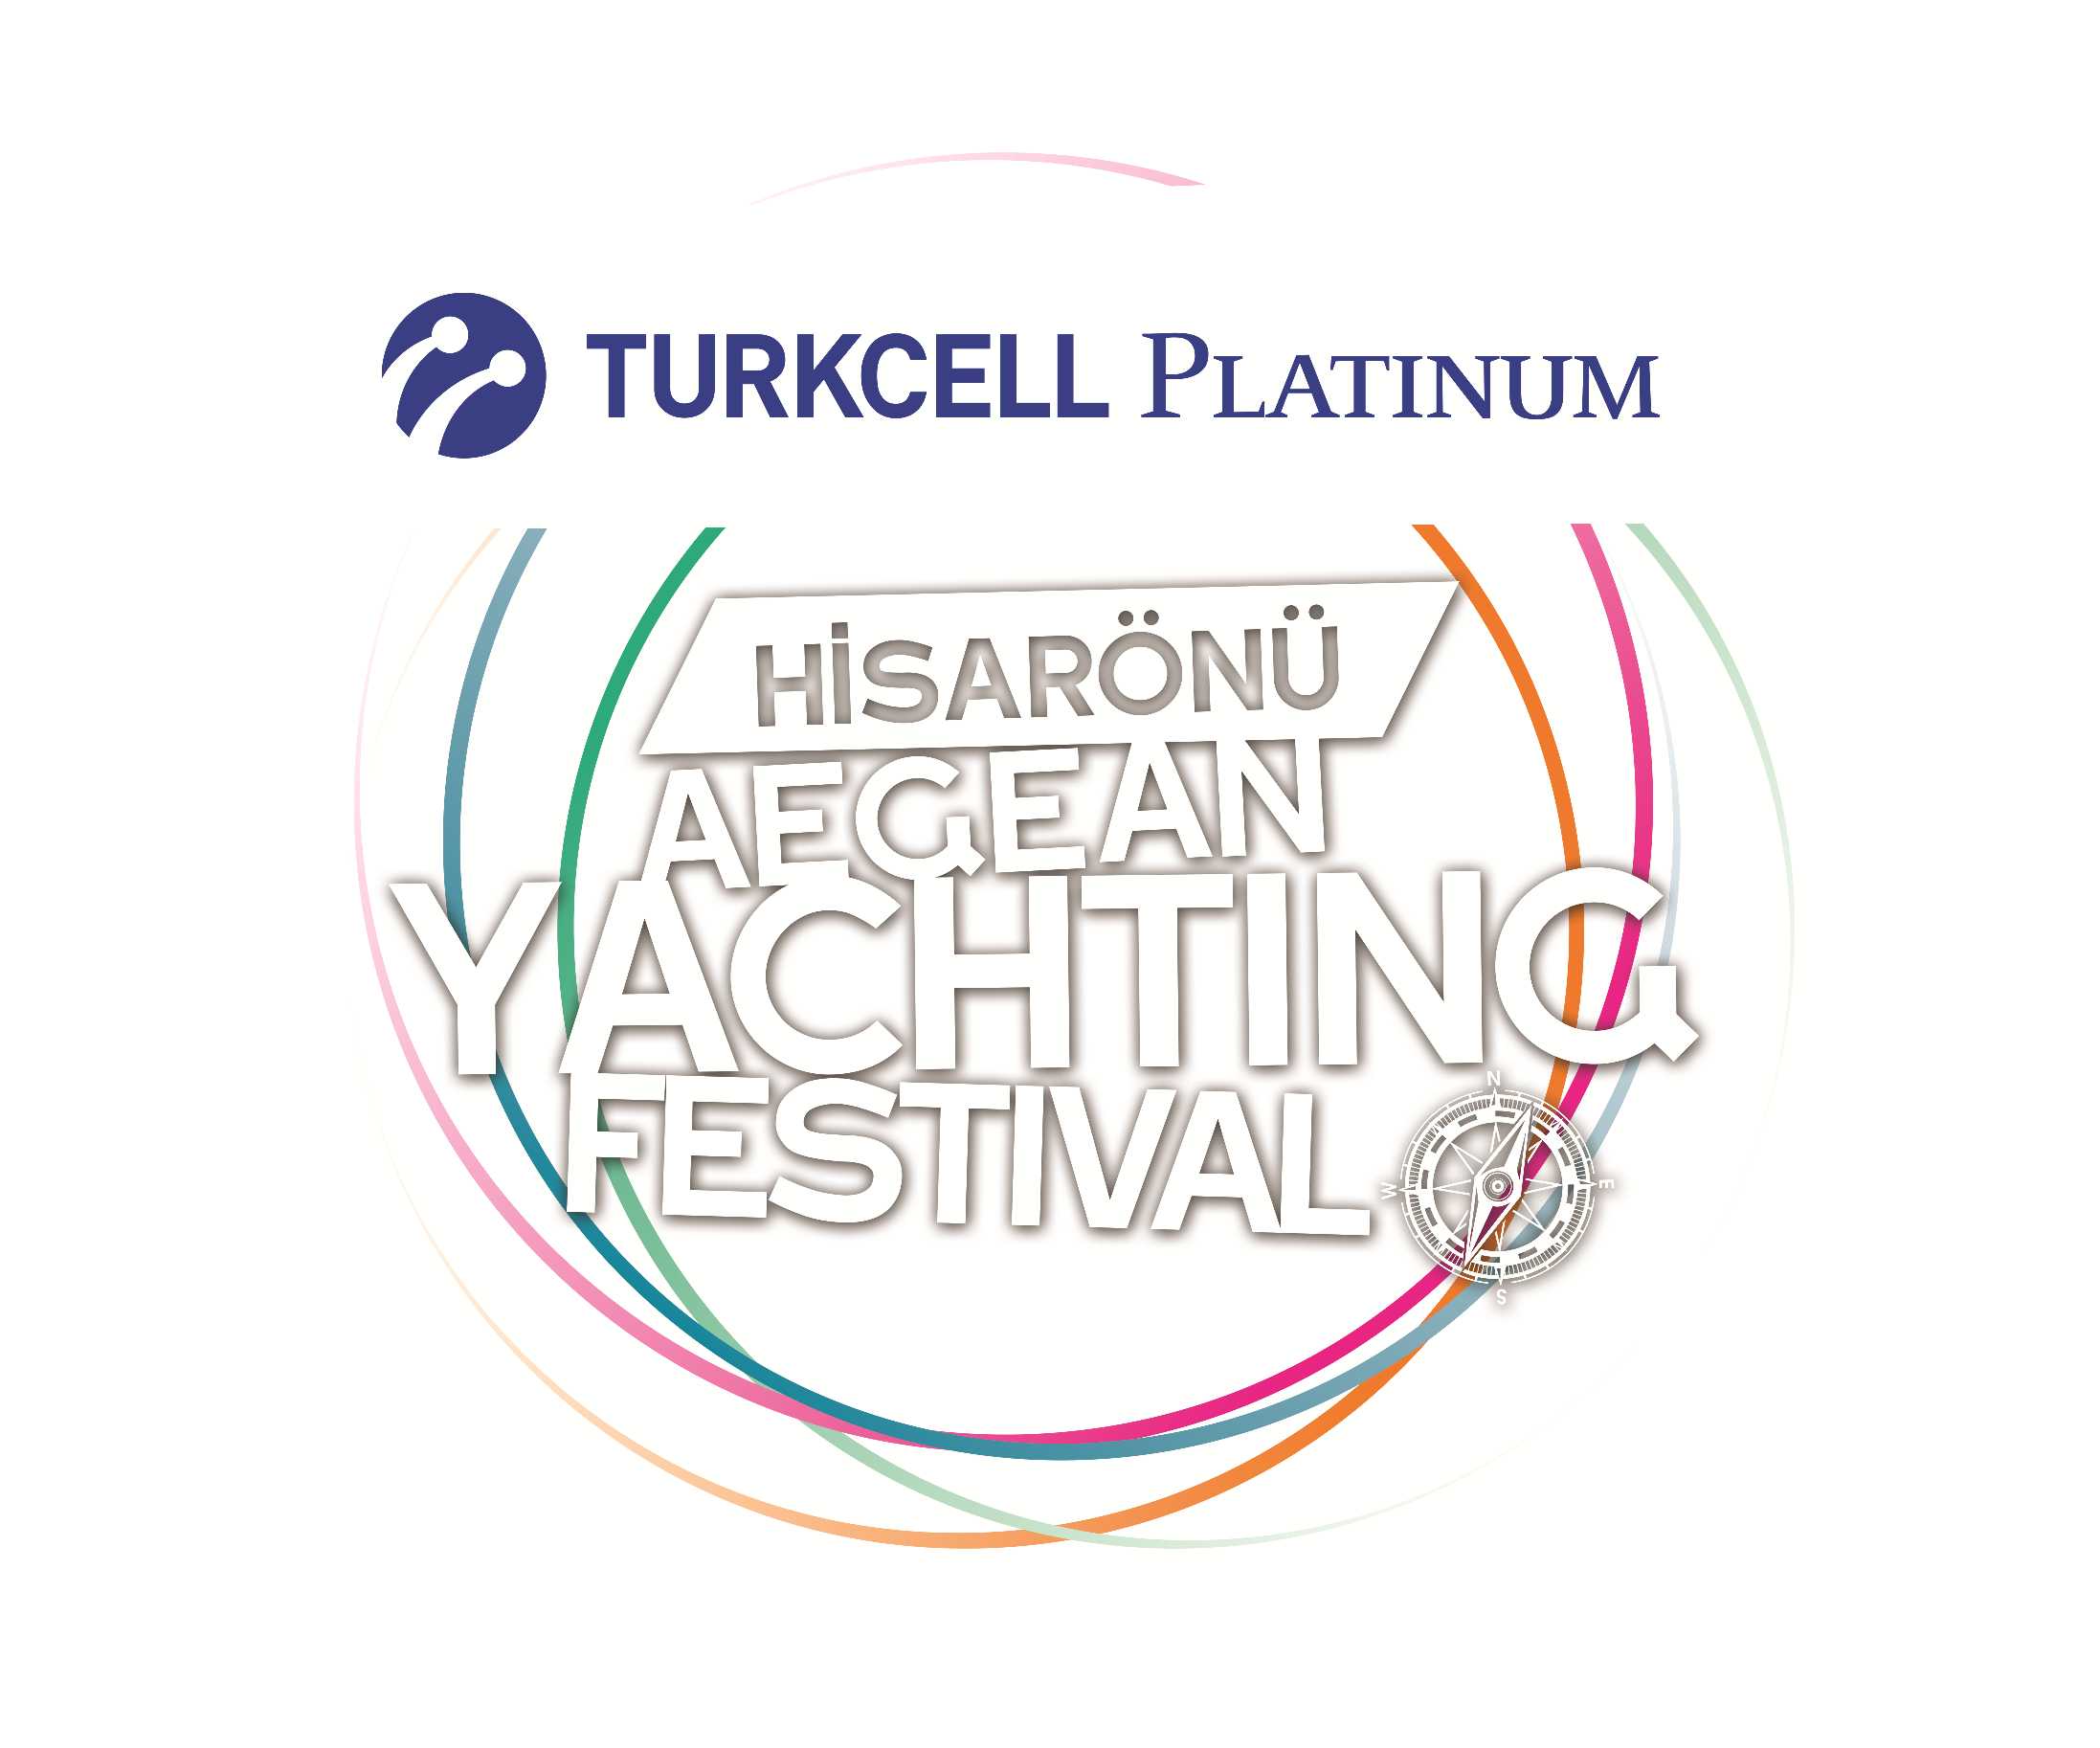 TURKCELL PLATINUM HISARONU AEGEAN YACHTING FESTIVAL